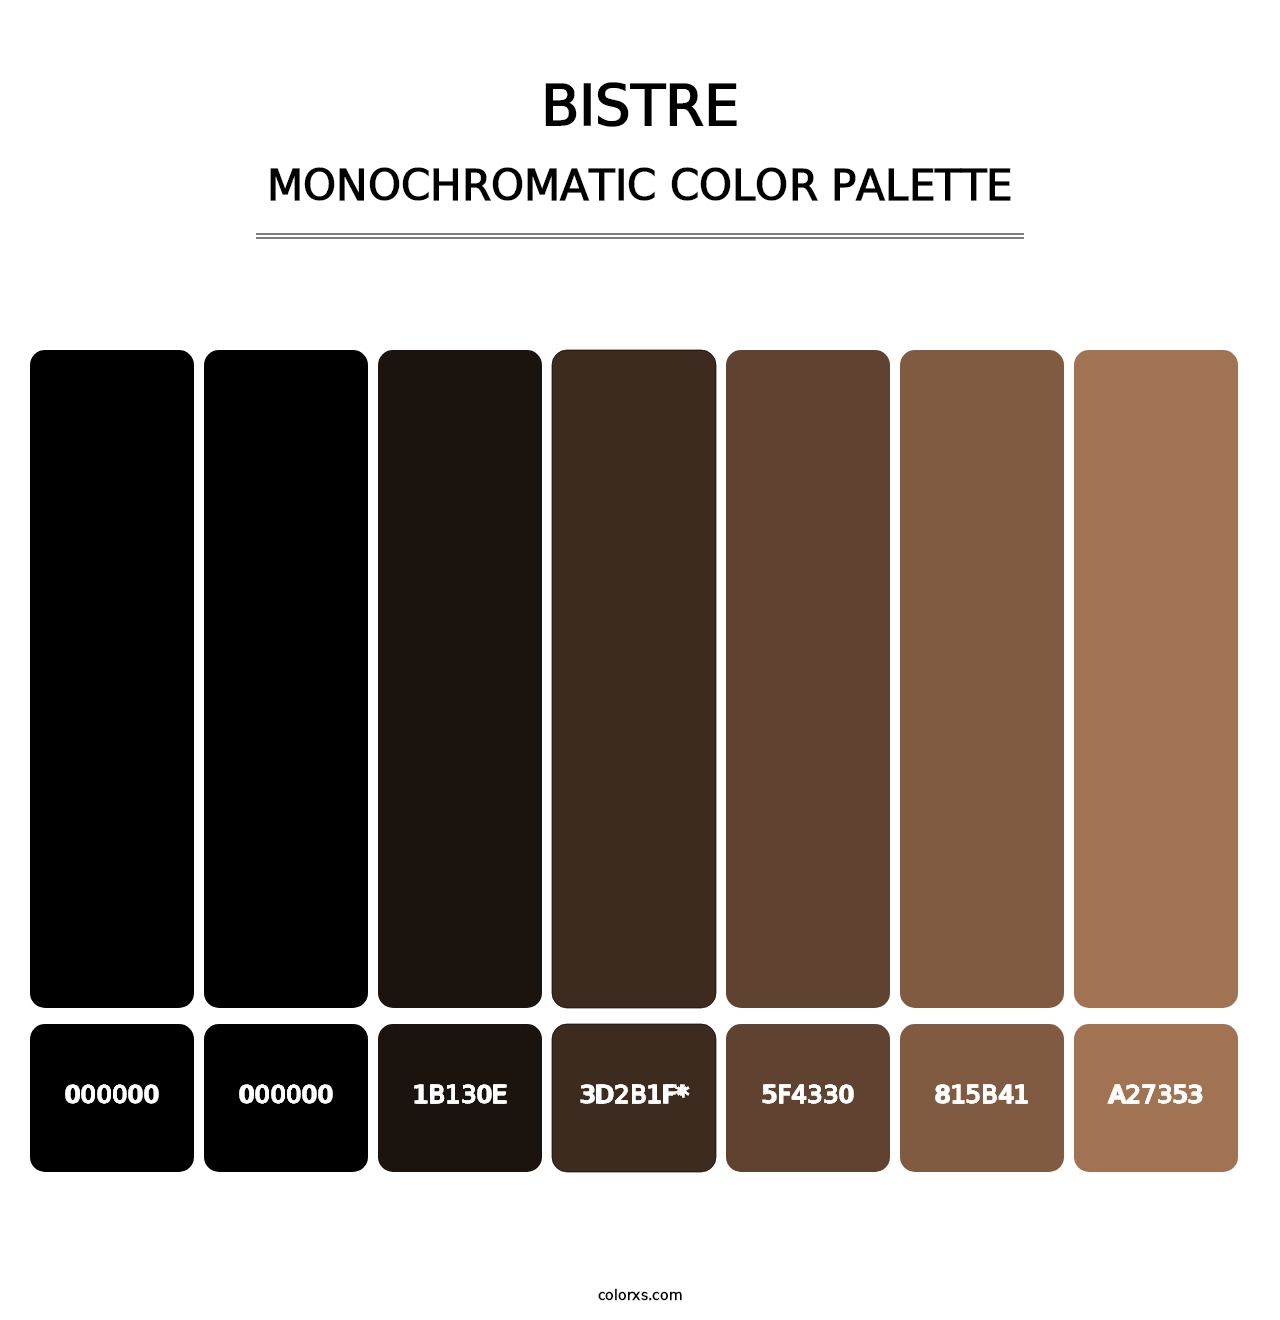 Bistre - Monochromatic Color Palette